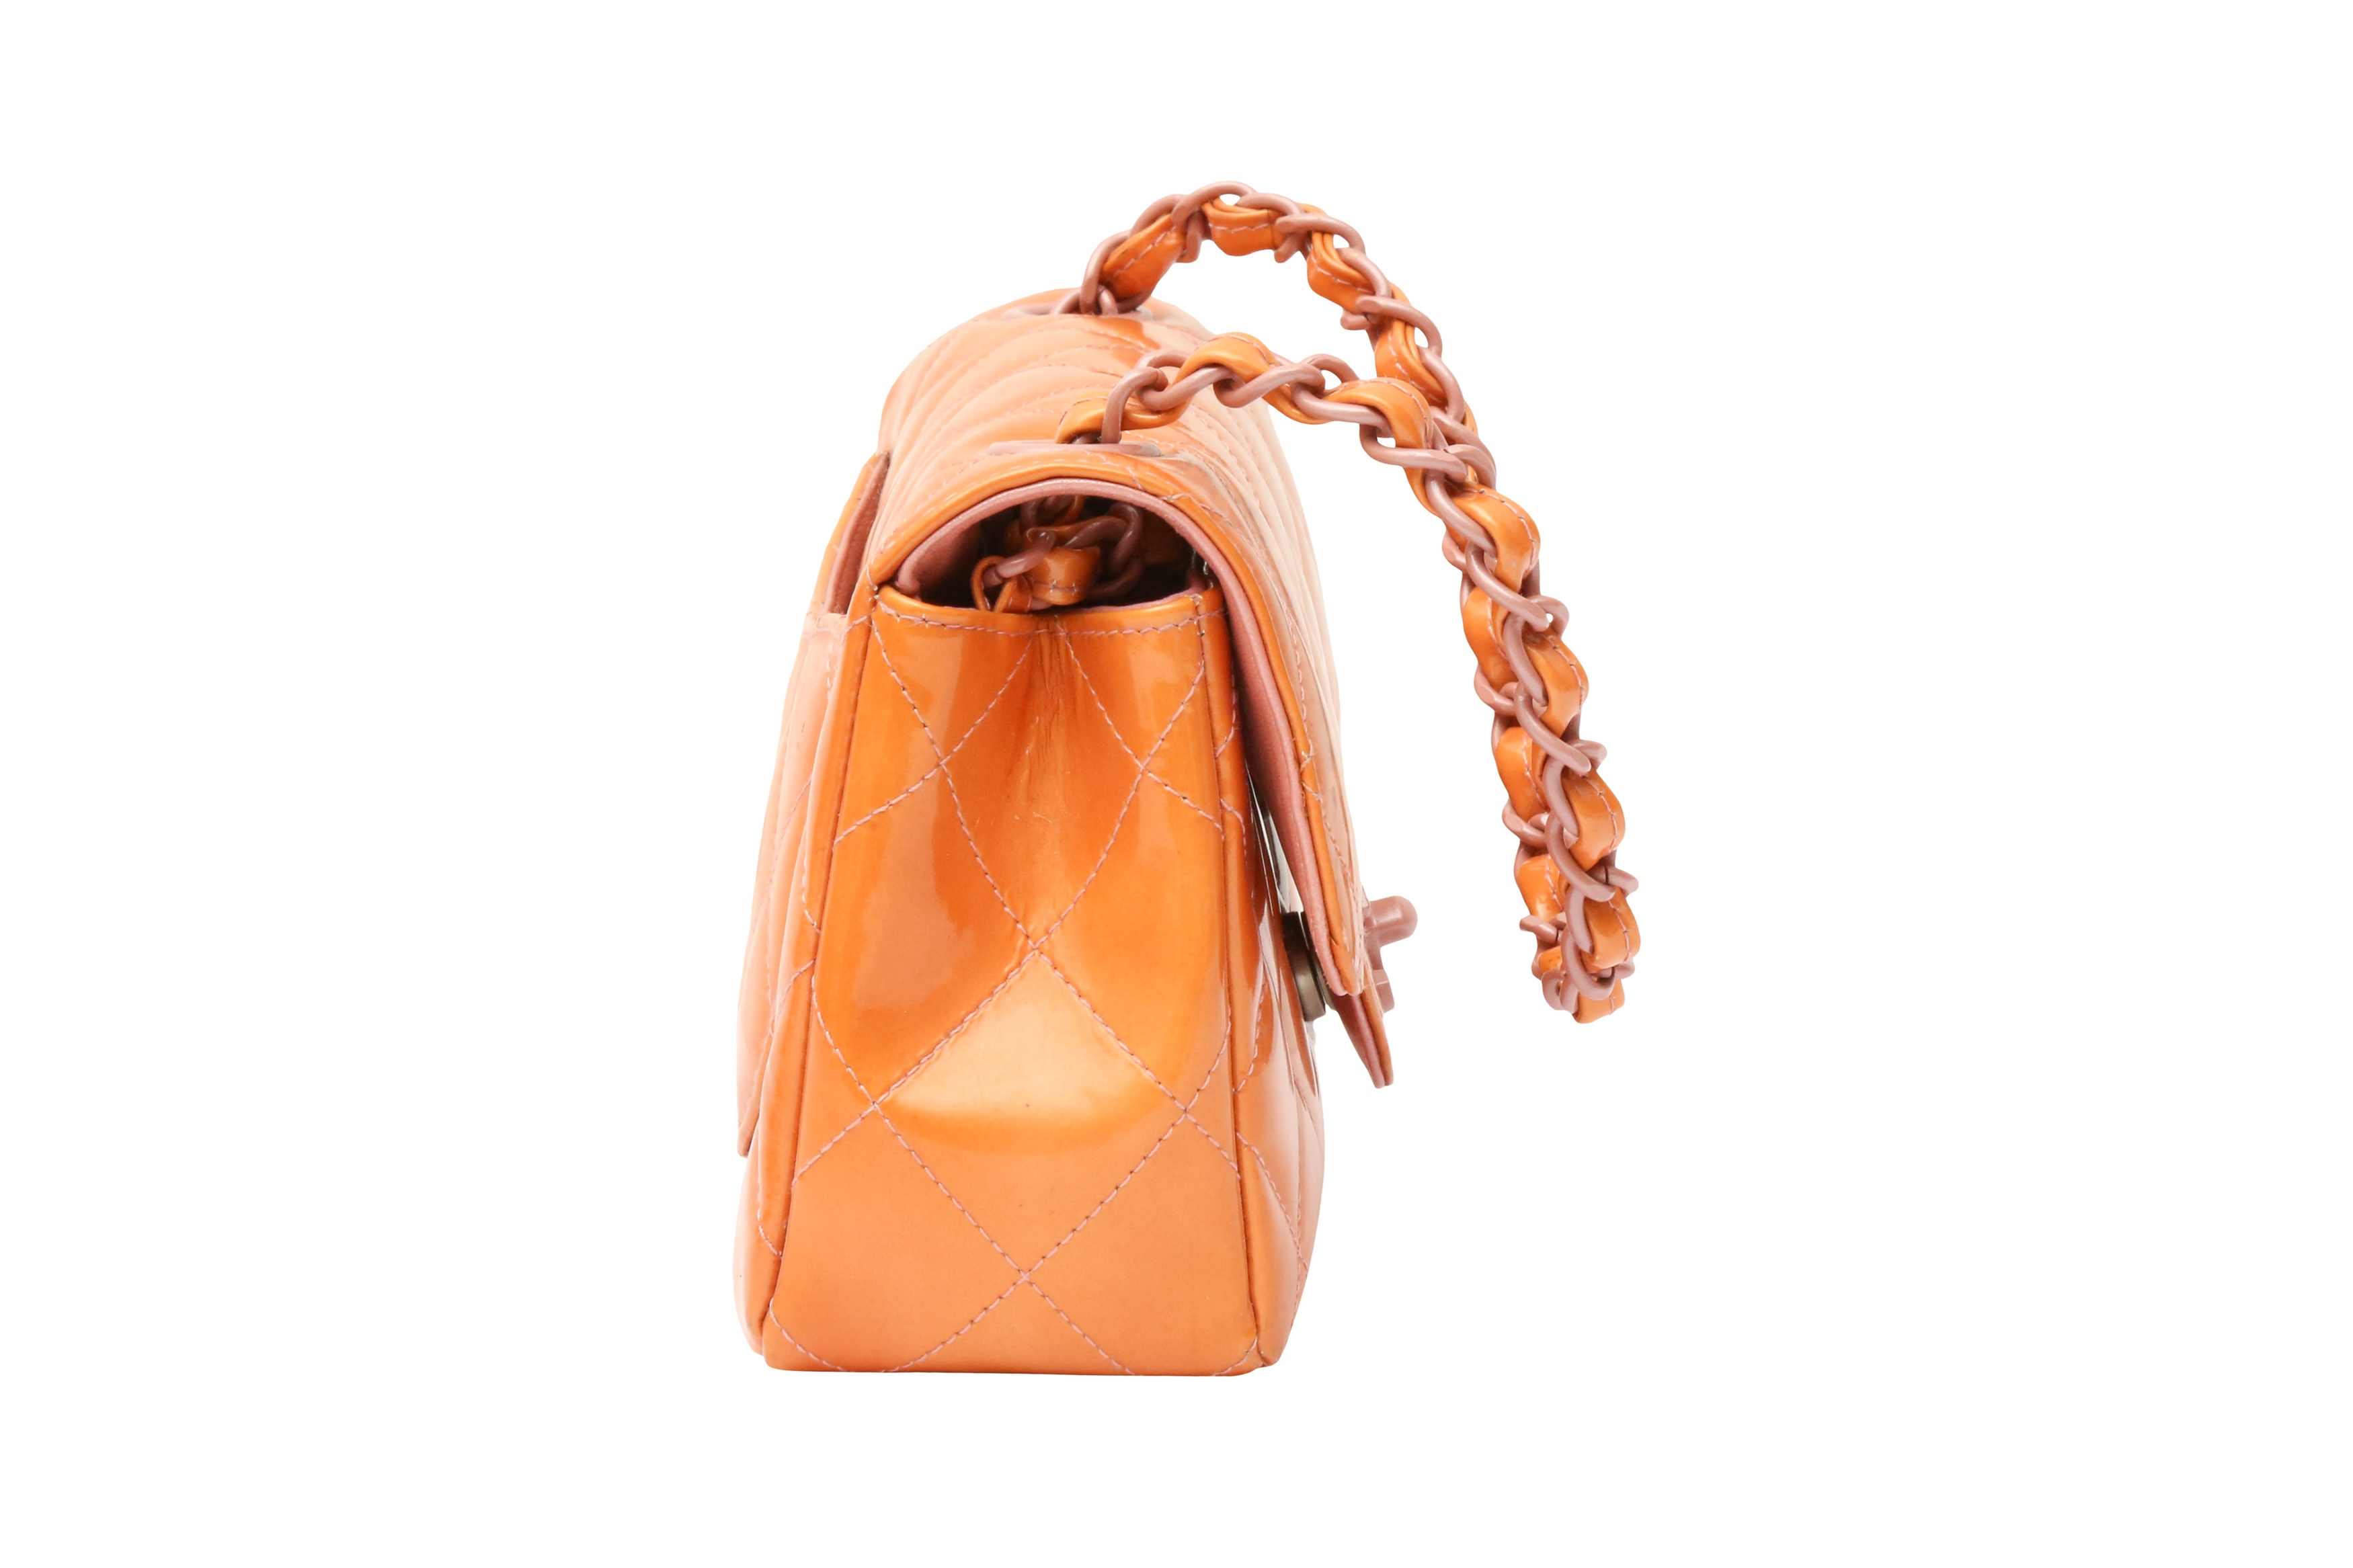 Chanel Orange Rectangle Mini Flap Bag - Image 4 of 6